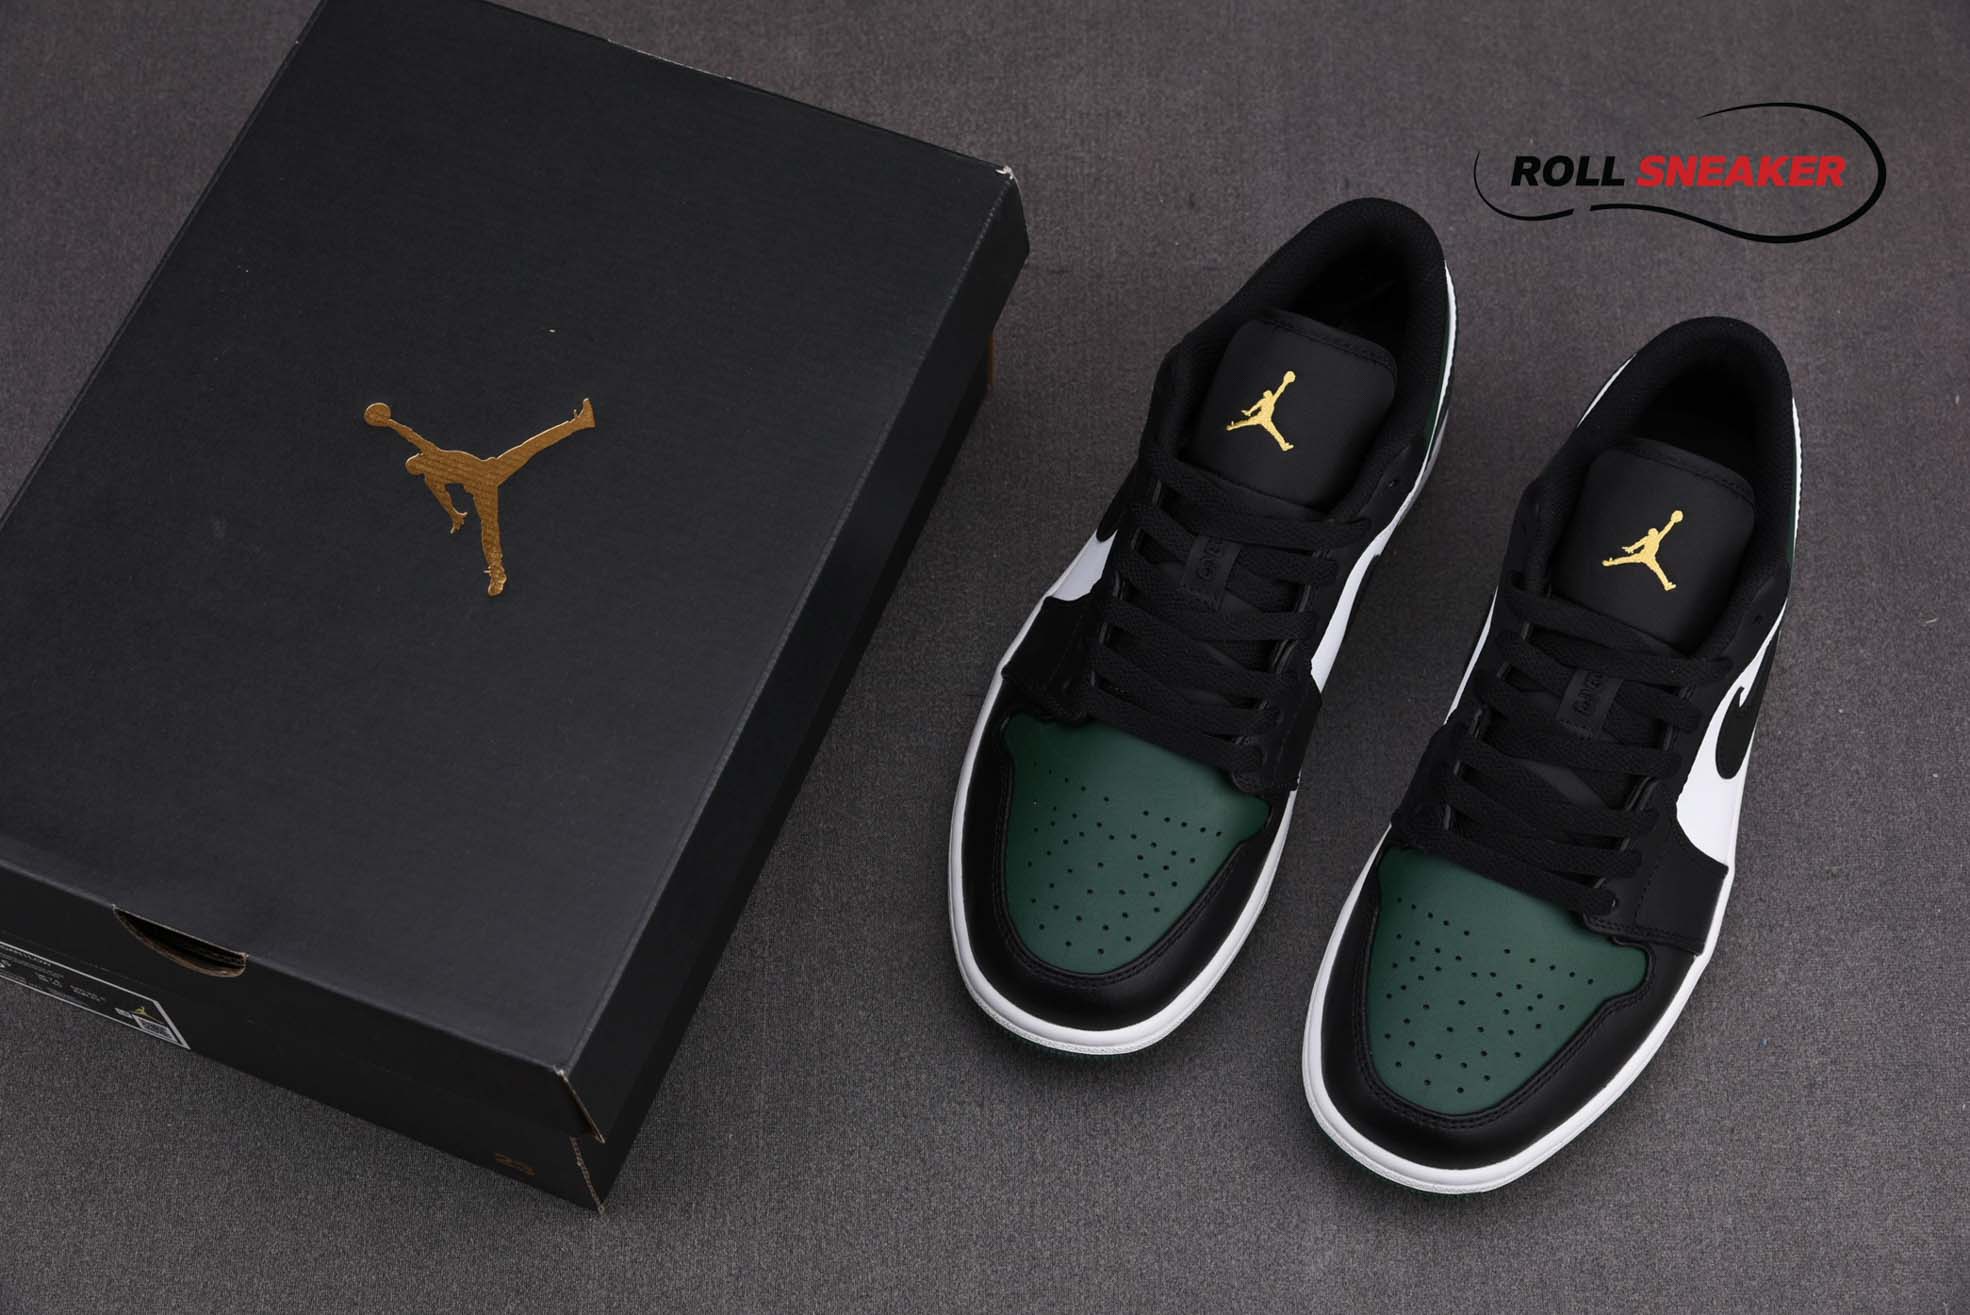 Nike Air Jordan 1 Low GS ‘Green Toe’
